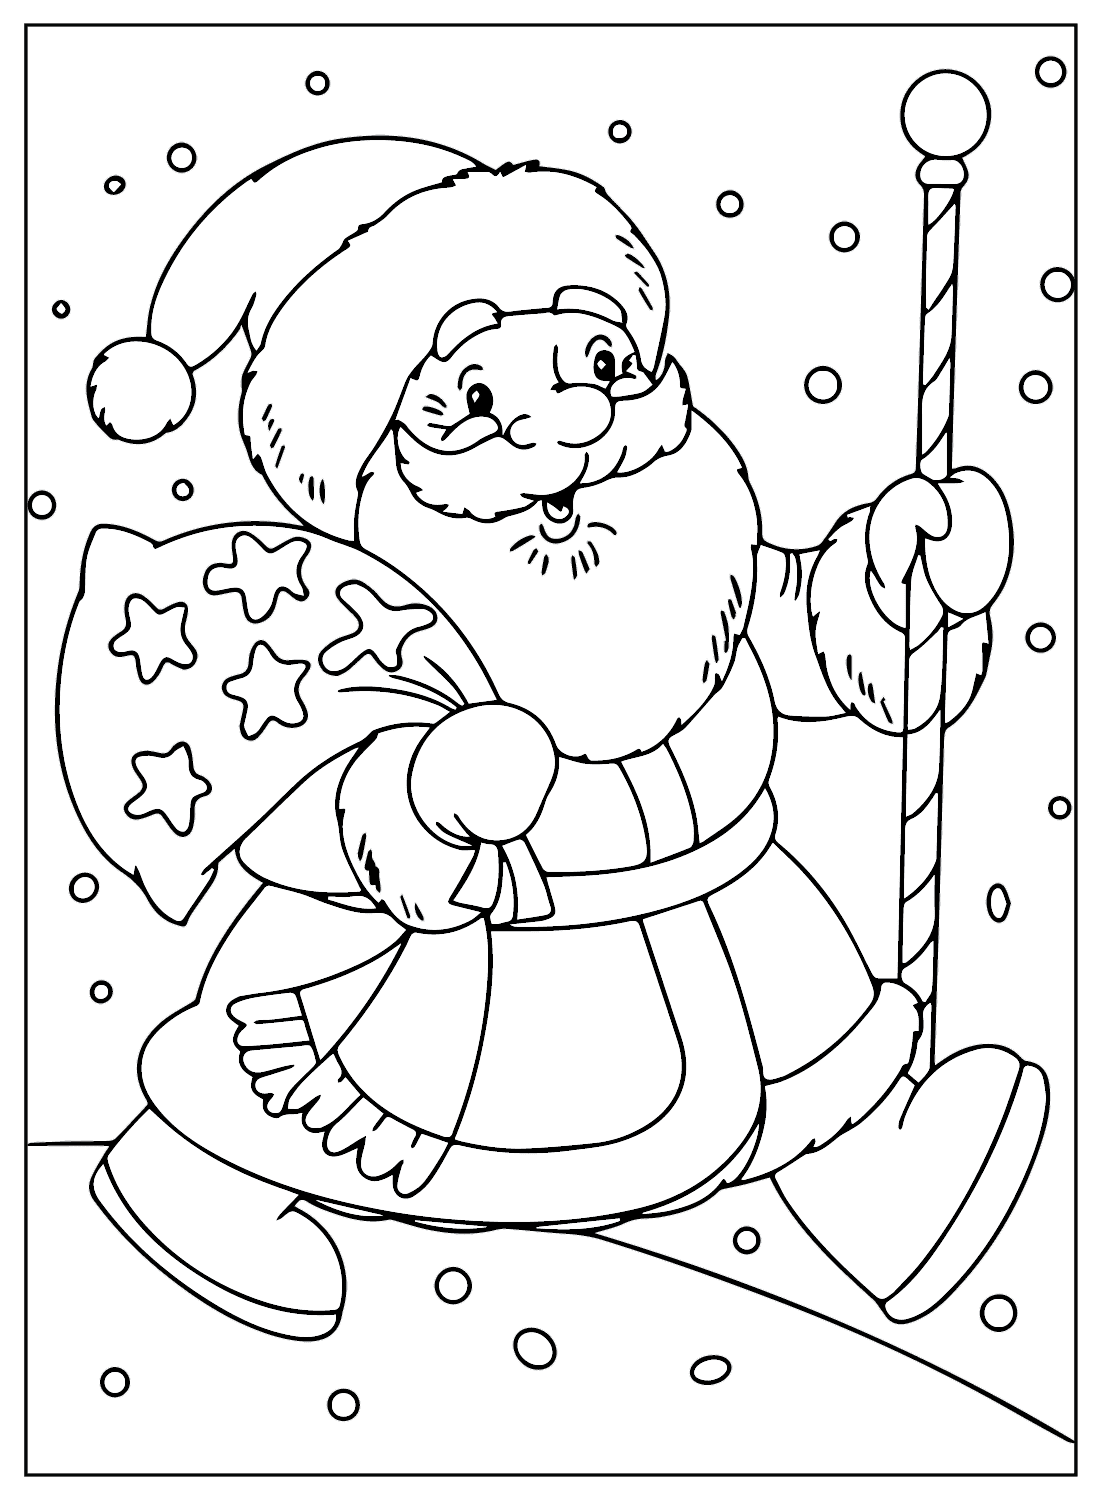 Santa Claus Images Coloring Page from Santa Claus